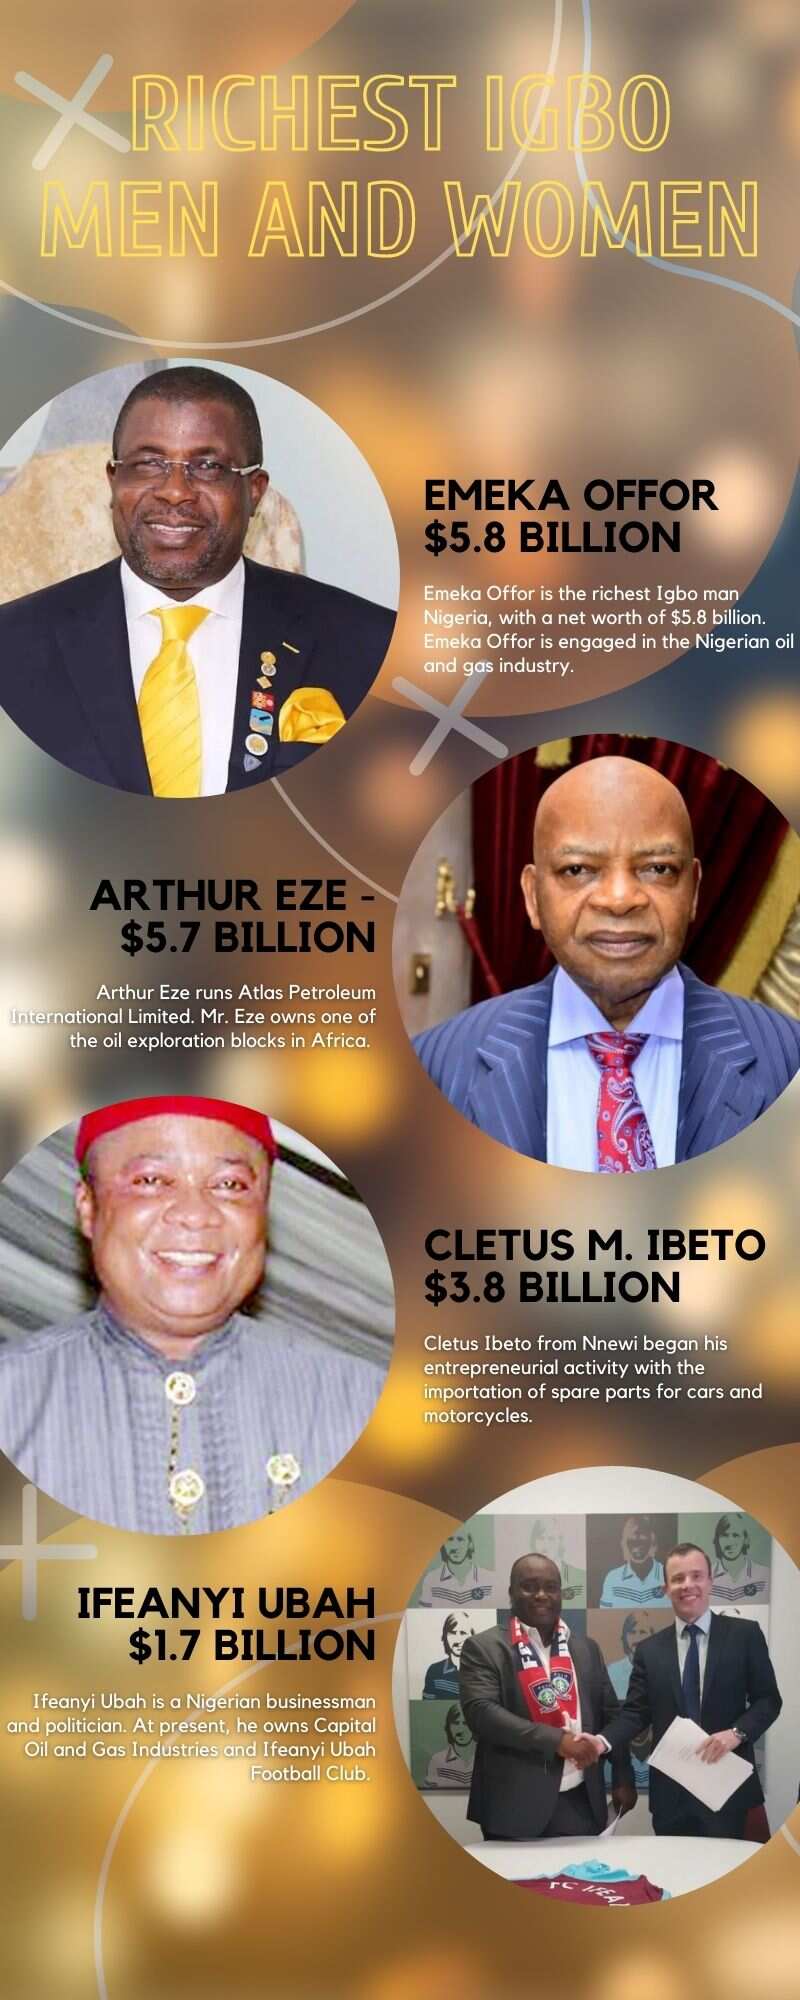 Richest Igbo men and women